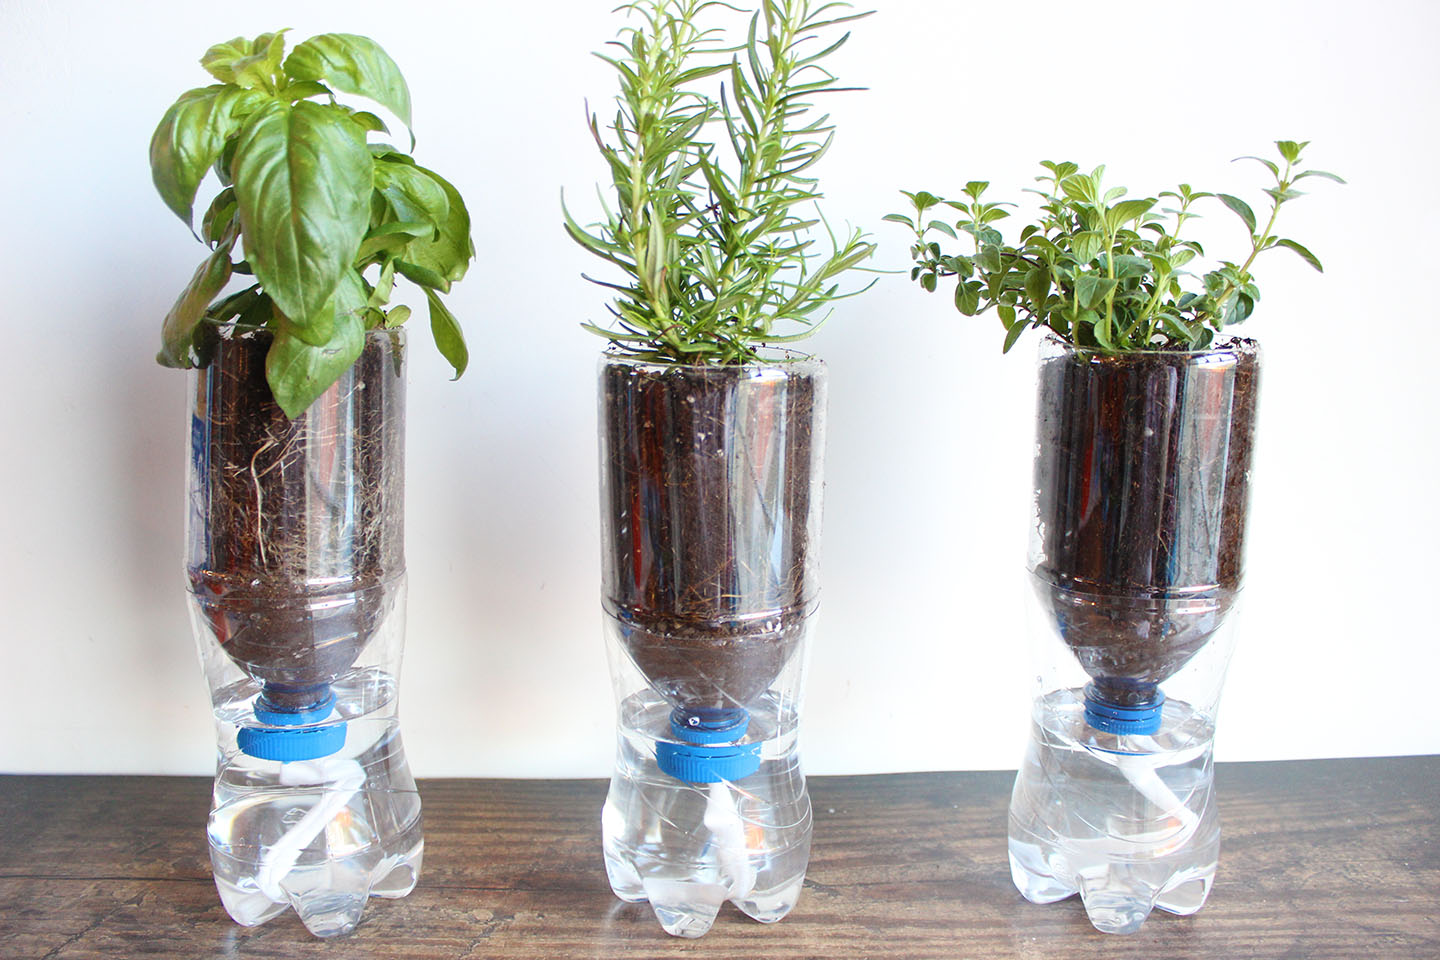 Build self watering planters (DIY)